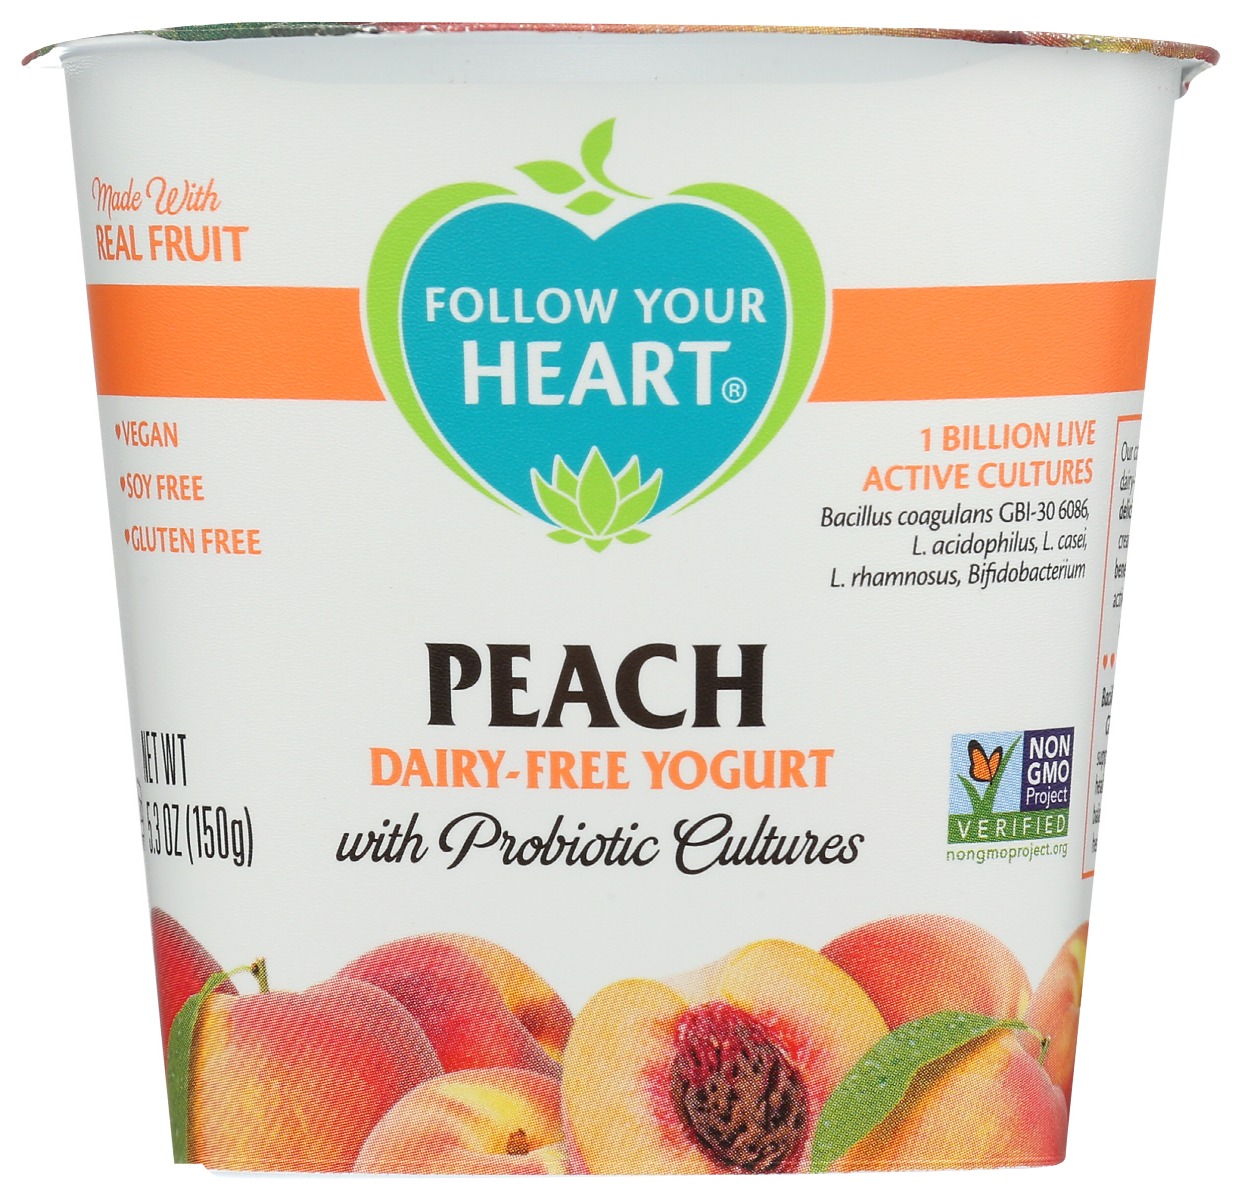 FOLLOW YOUR HEART: Peach Dairy-Free Yogurt, 5.3 oz - 0049568350042